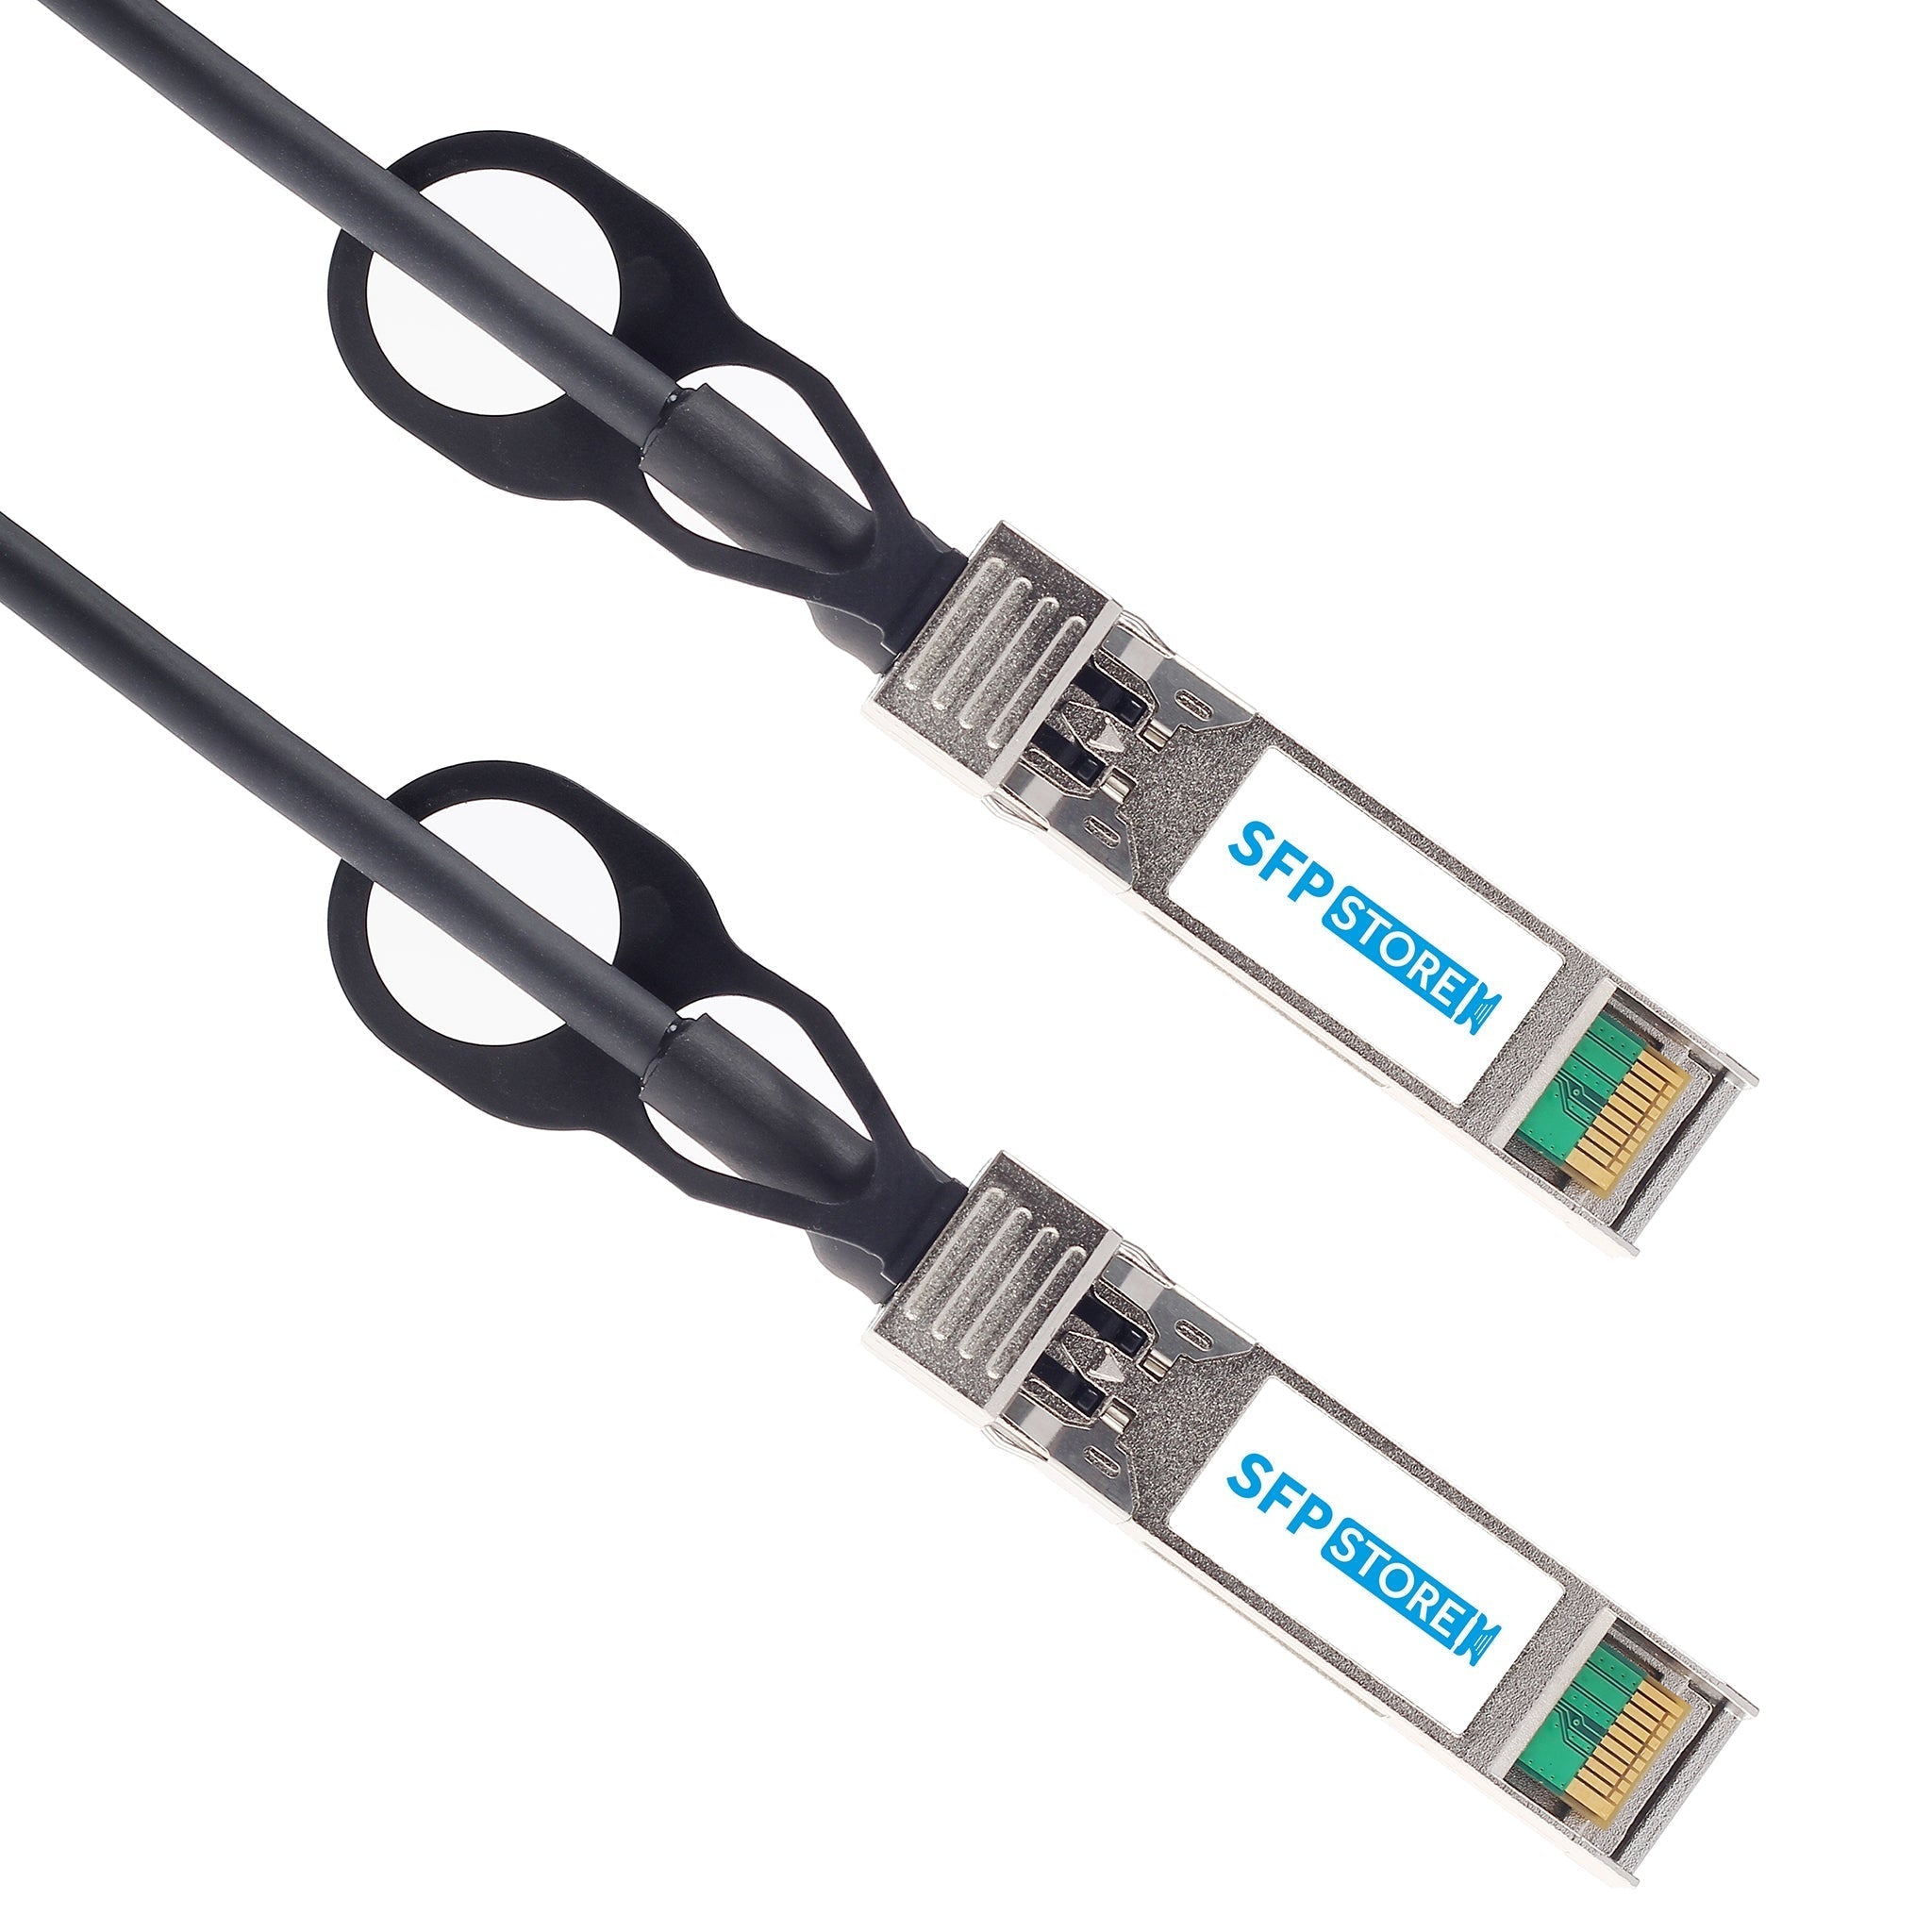 SFP-10G-C-3M-C - 3m Alcatel-Lucent (Nokia) Compatible 10G SFP+ Passive Direct Attach Copper Twinax Cable